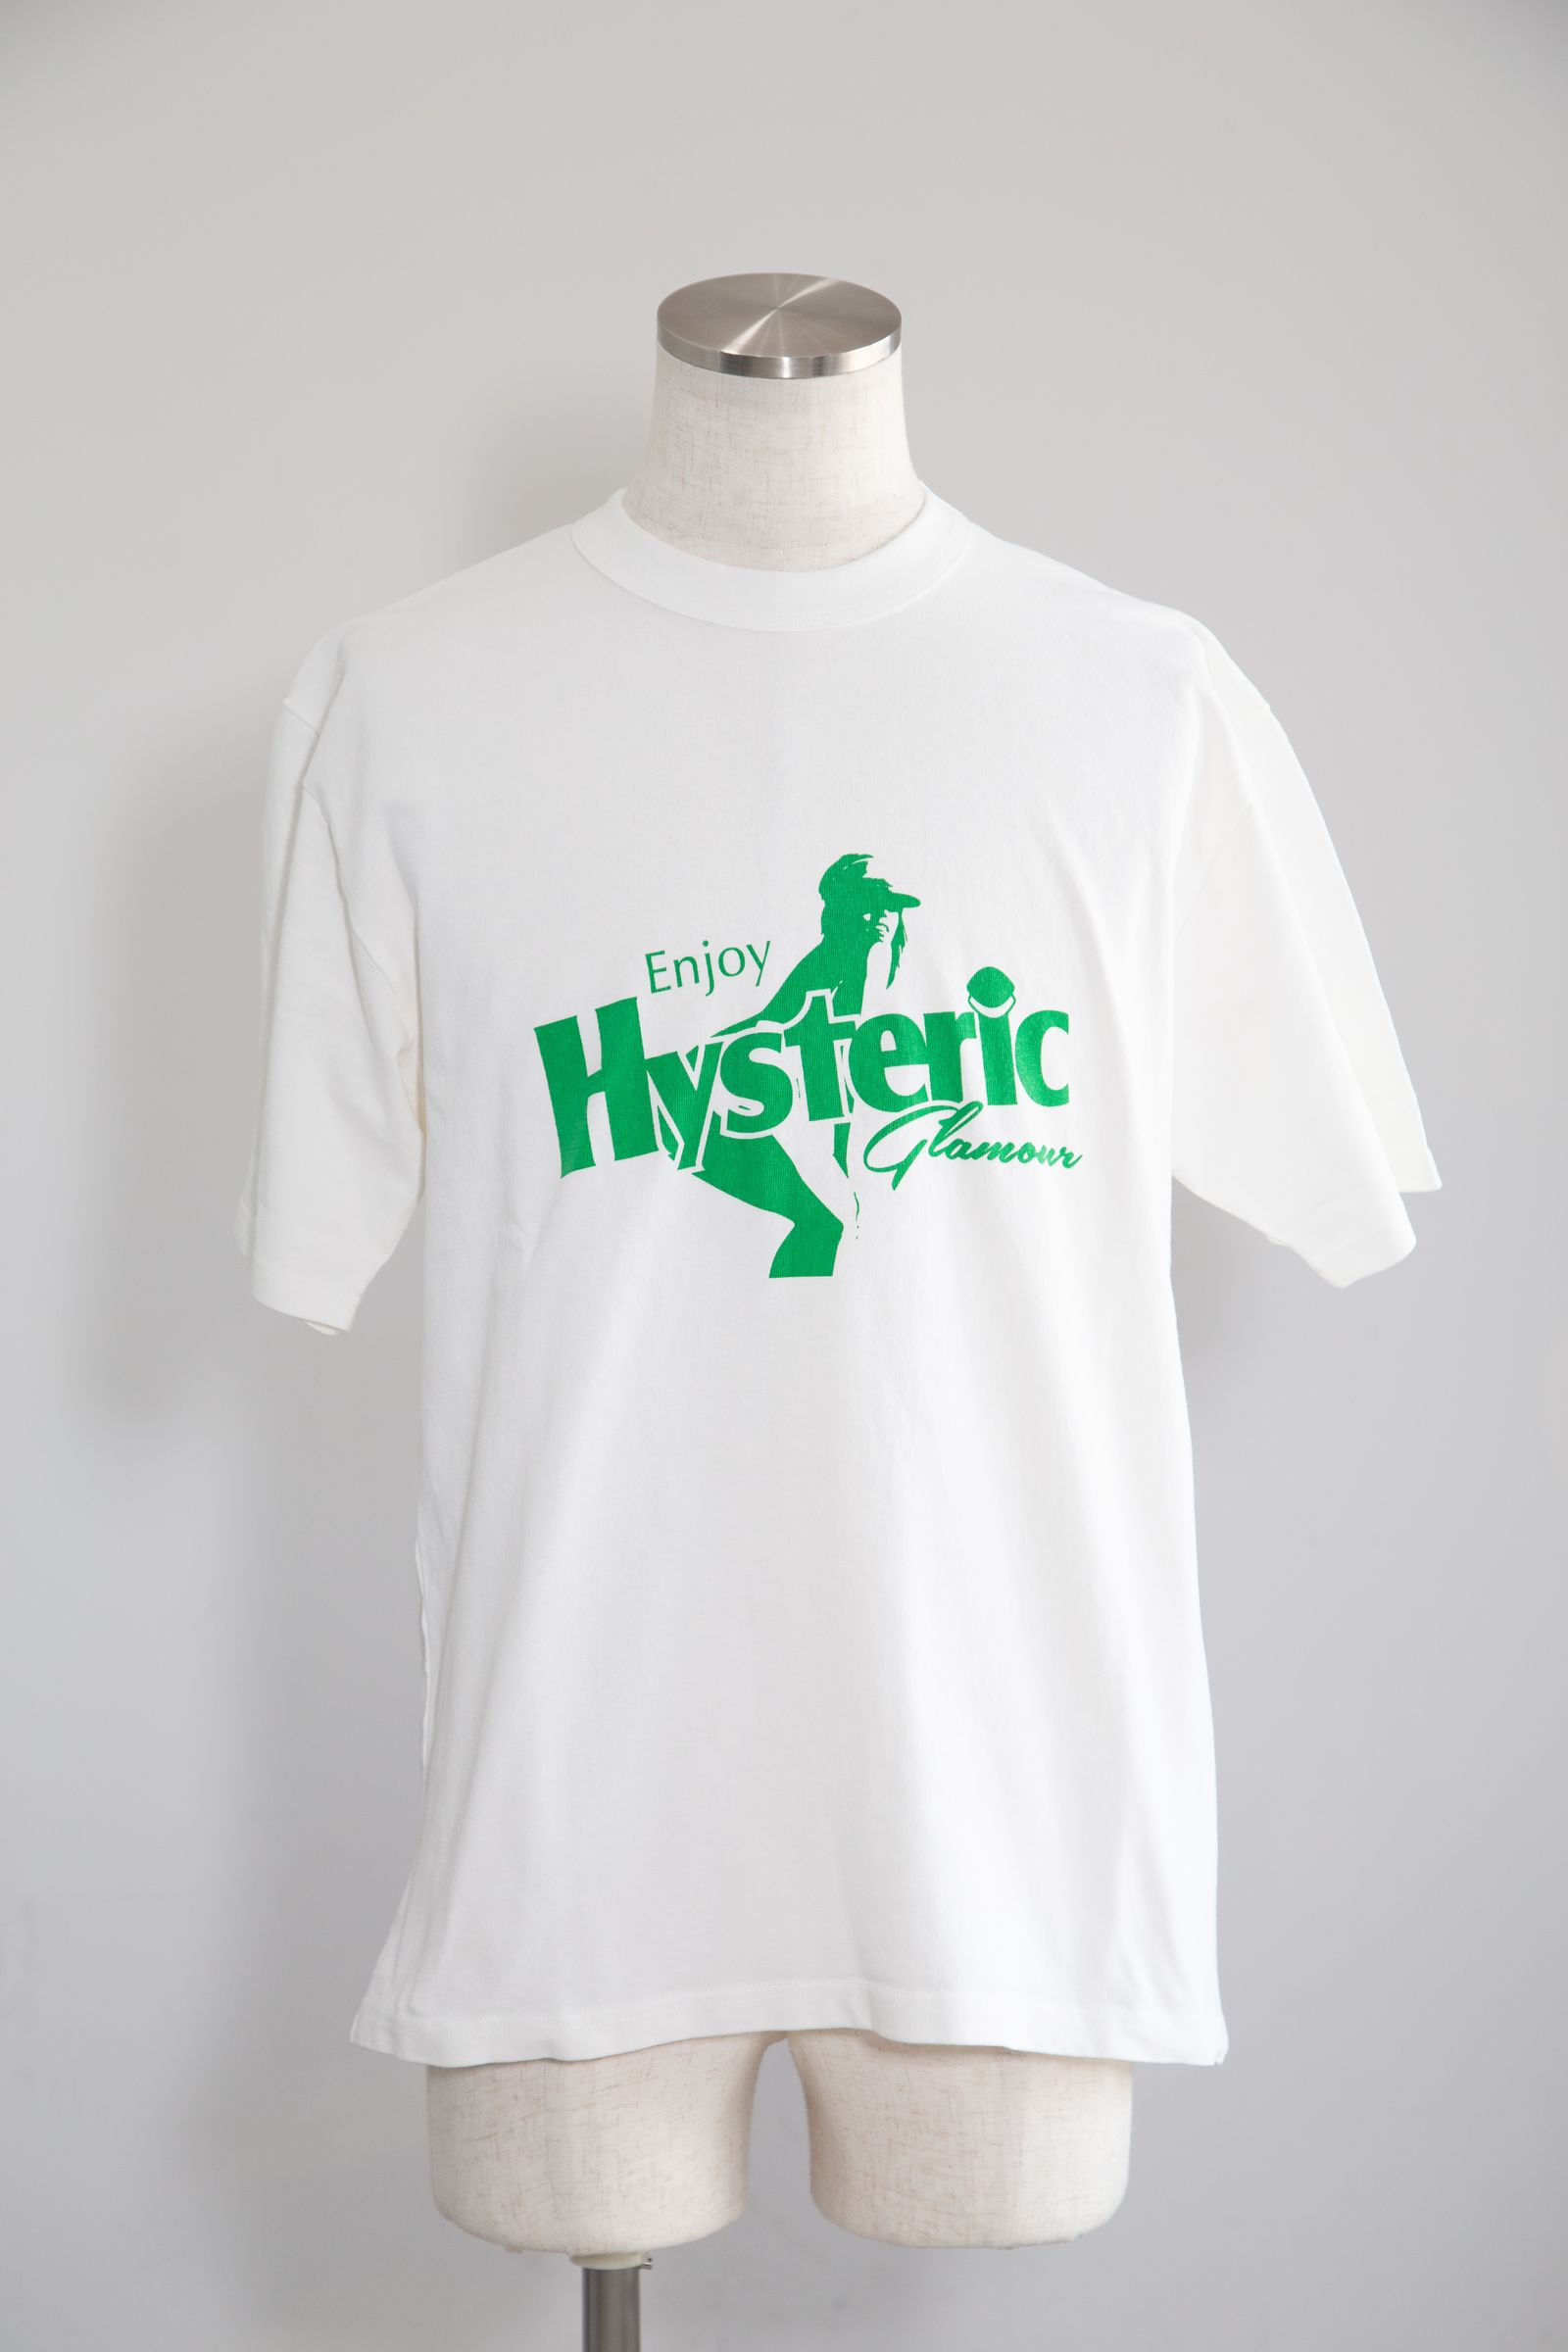 HYSTERIC GLAMOUR - ENJOY HG Tシャツ / グリーン | Tempt